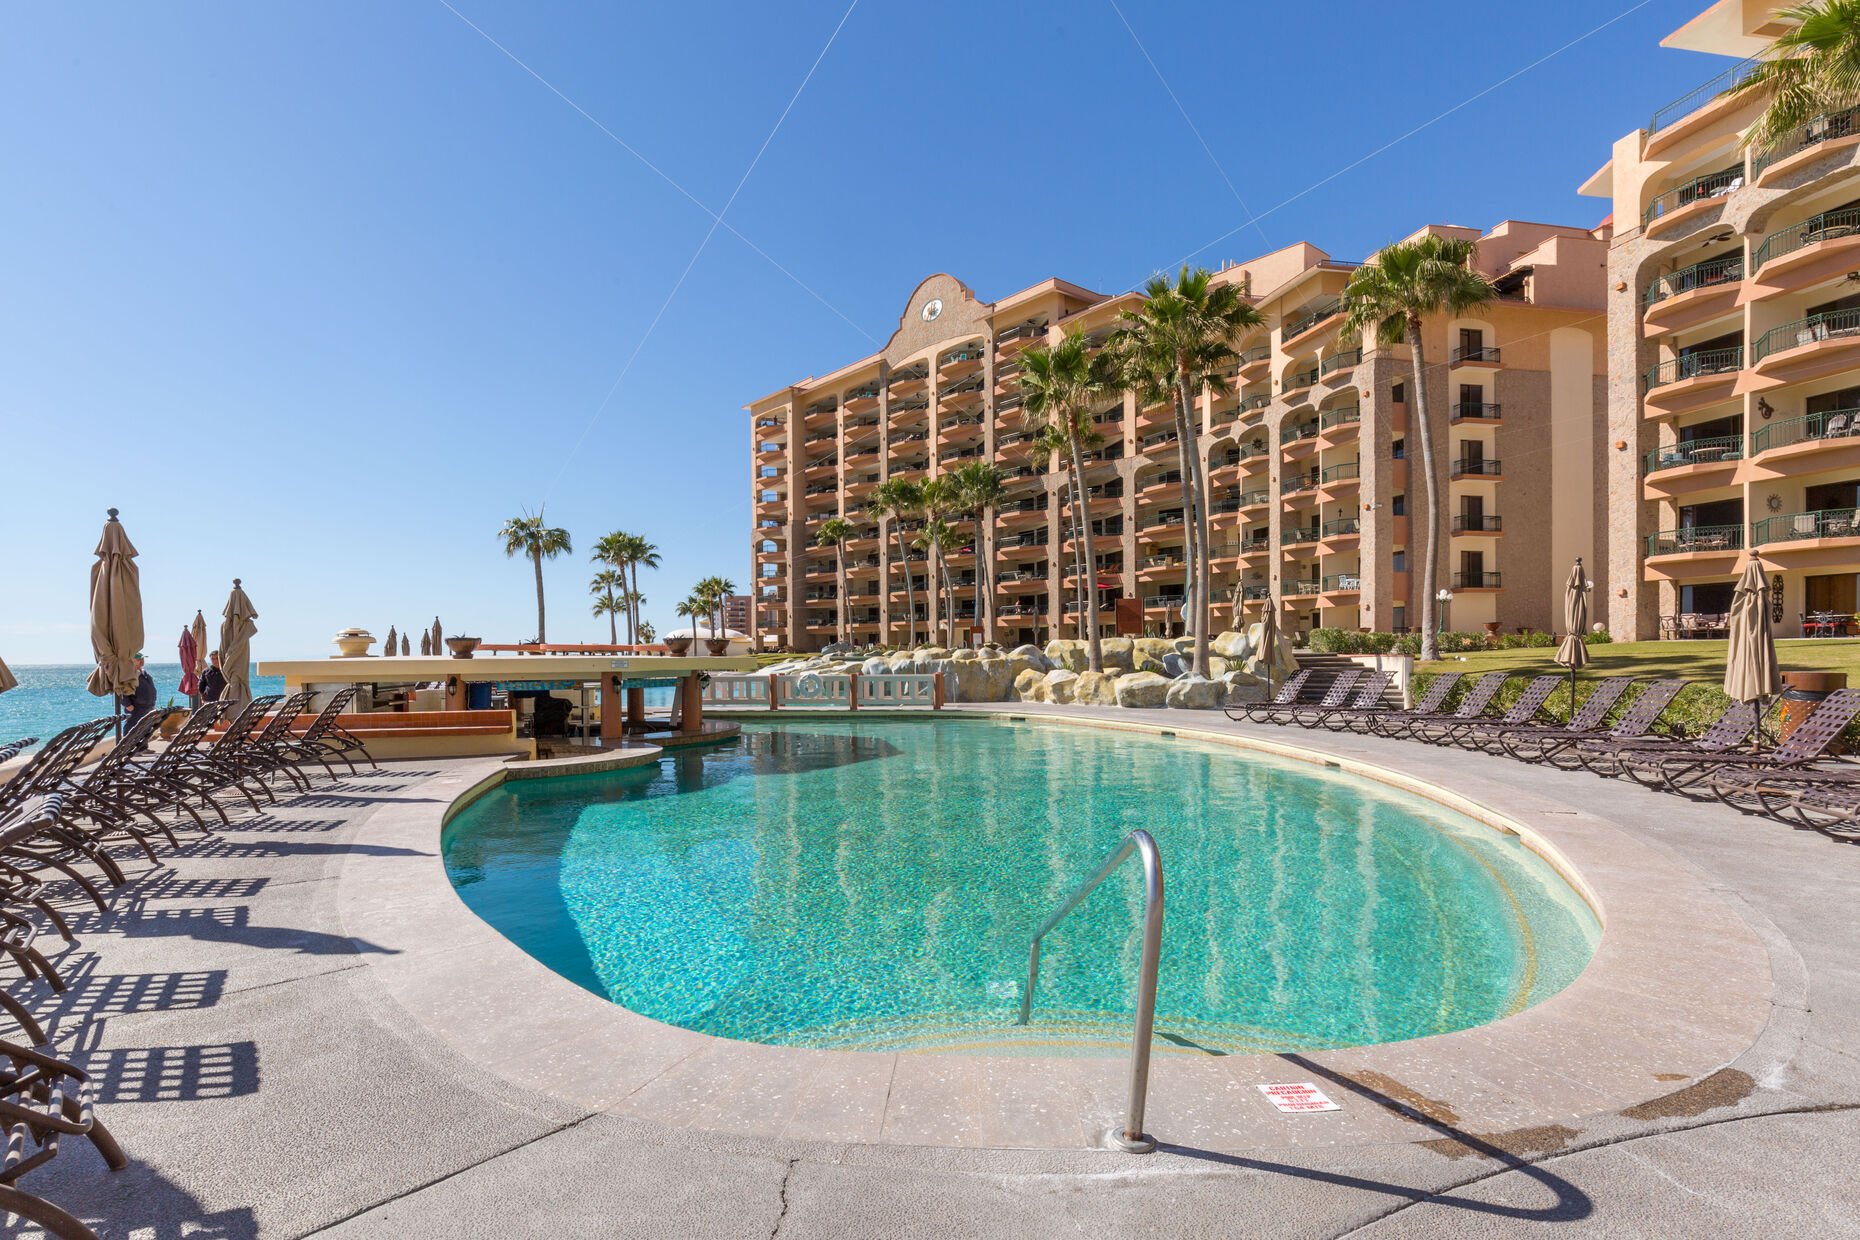 Sonoran Sea Resort pools